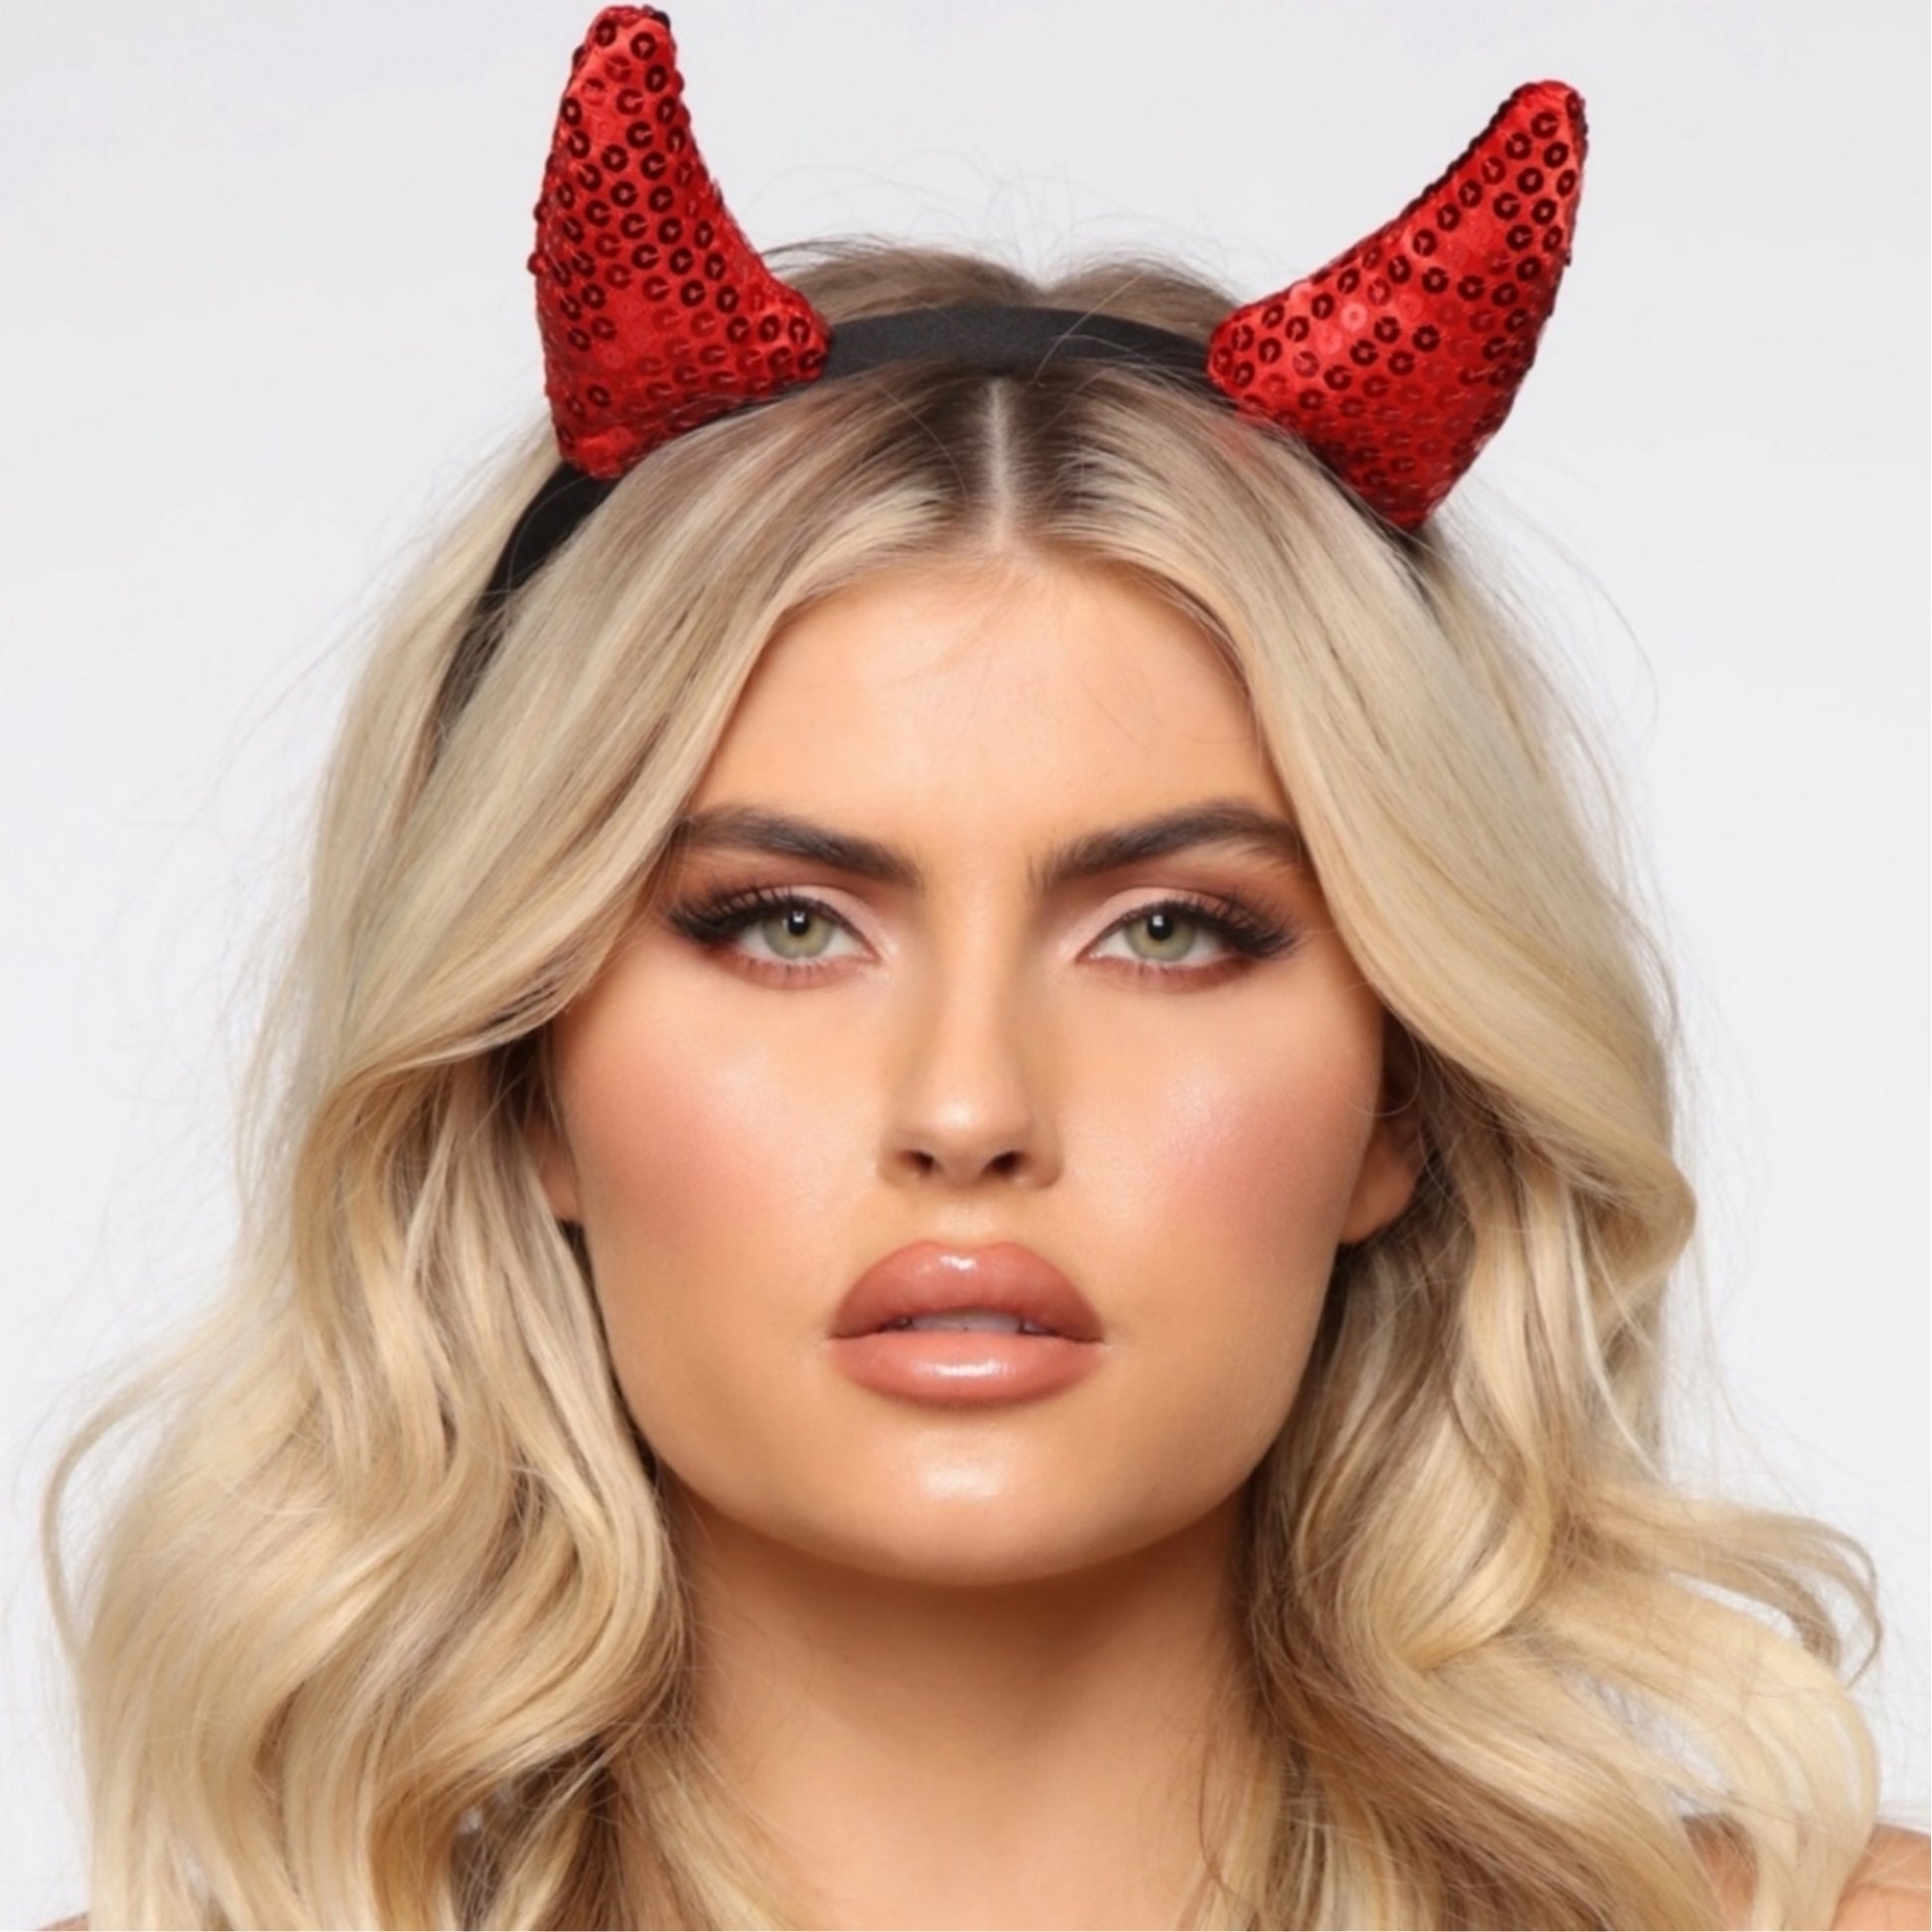 Sequins Devil Horns Headband | Sparkly Red Devil Horns Head Piece Accessory - Fashion Nova - Headbands